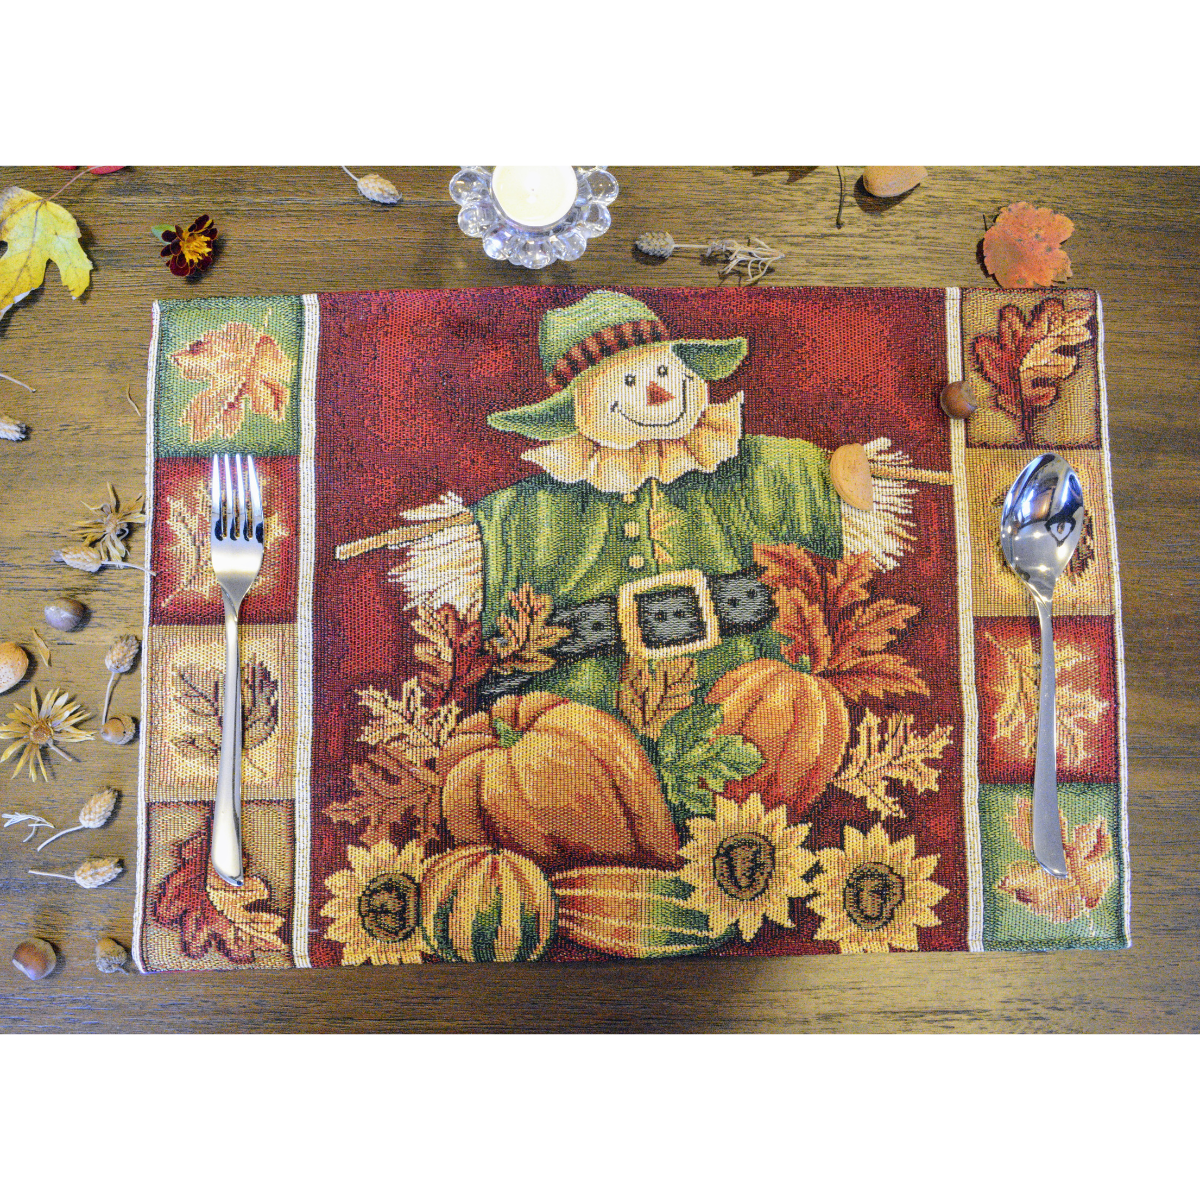 Tache Pumpkin Patch Scarecrow Autumn Harvest Woven Tapestry Placemat Set of 4 (12921PM) - Tache Home Fashion